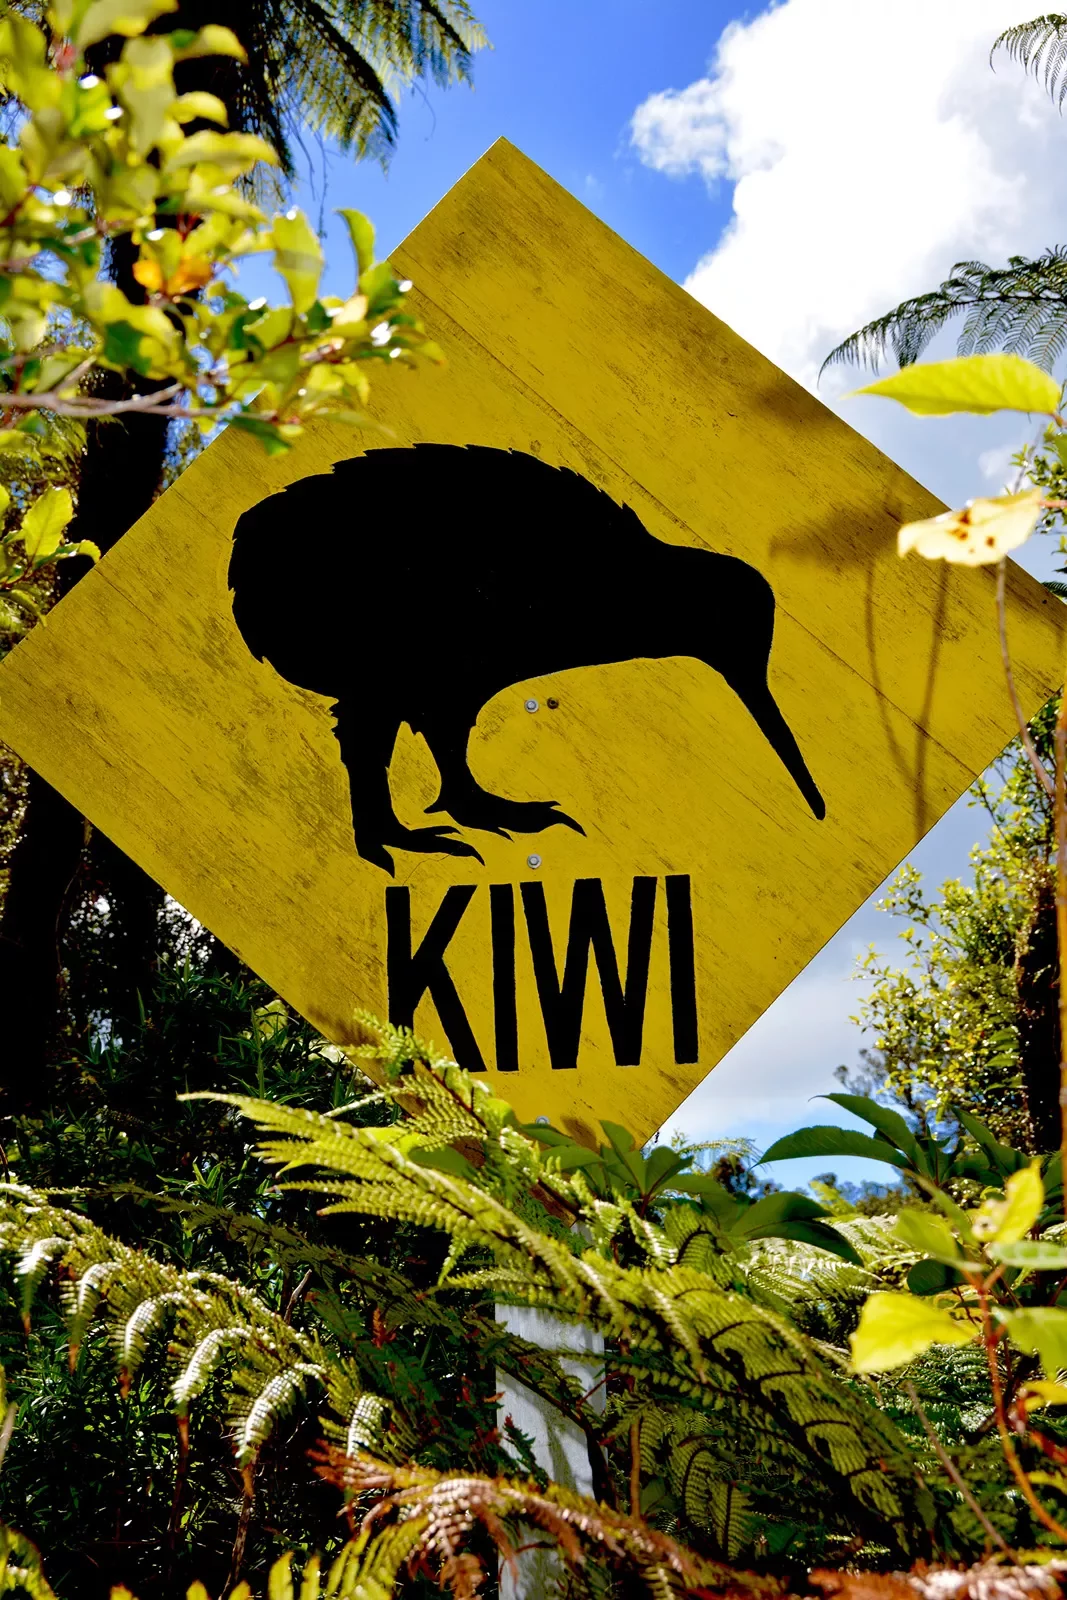 Yellow sign for a kiwi bird